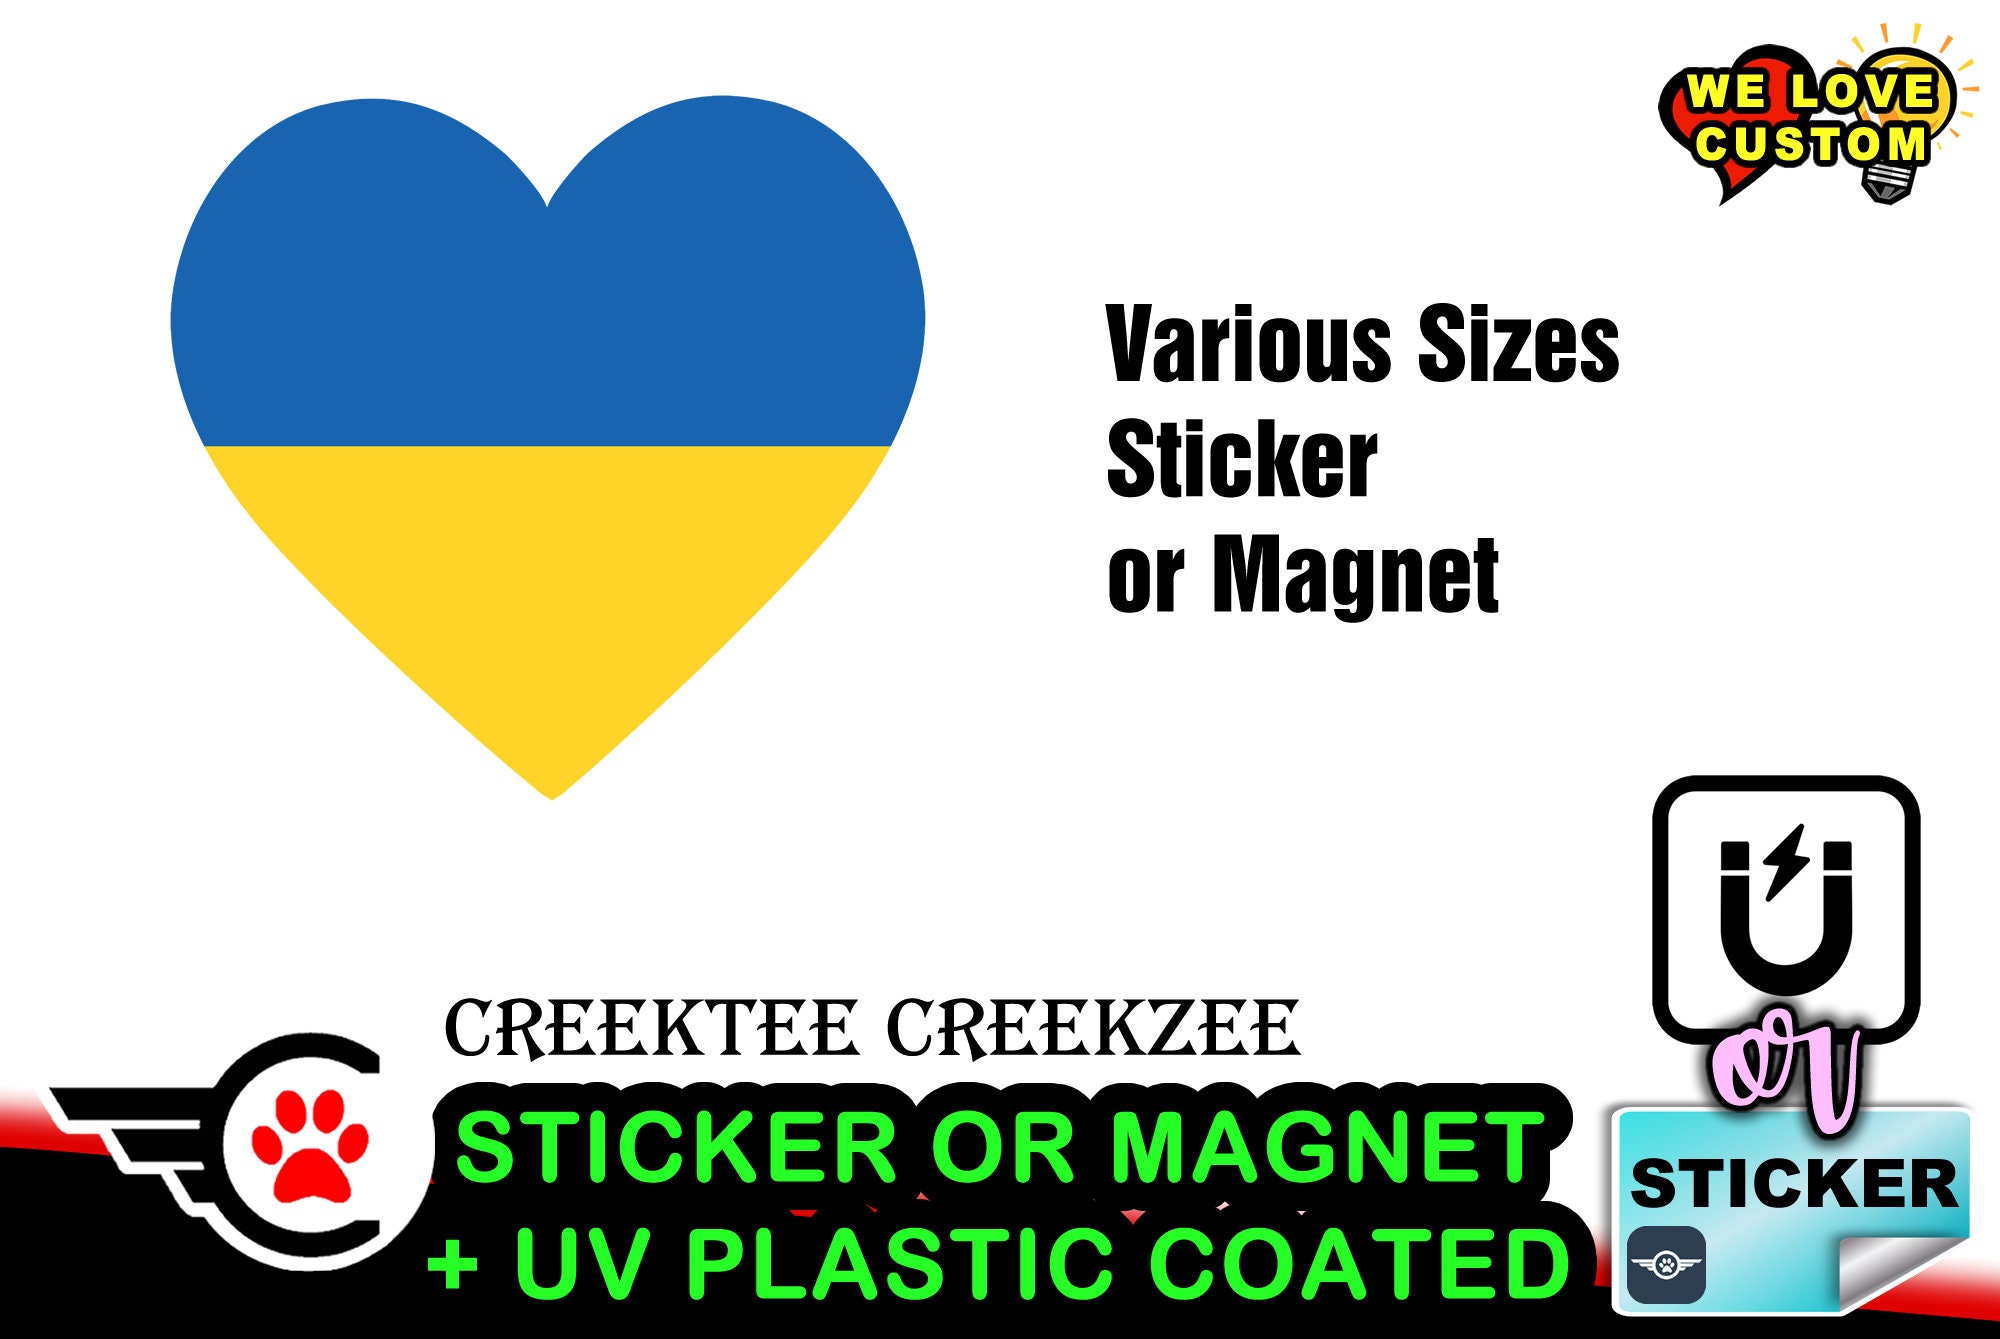 10X Ukraine Heart Sticker or Magnet Premium 20mil magnet or Vinyl Sticker in UV 4.7ml Laminate Coating in various sizes